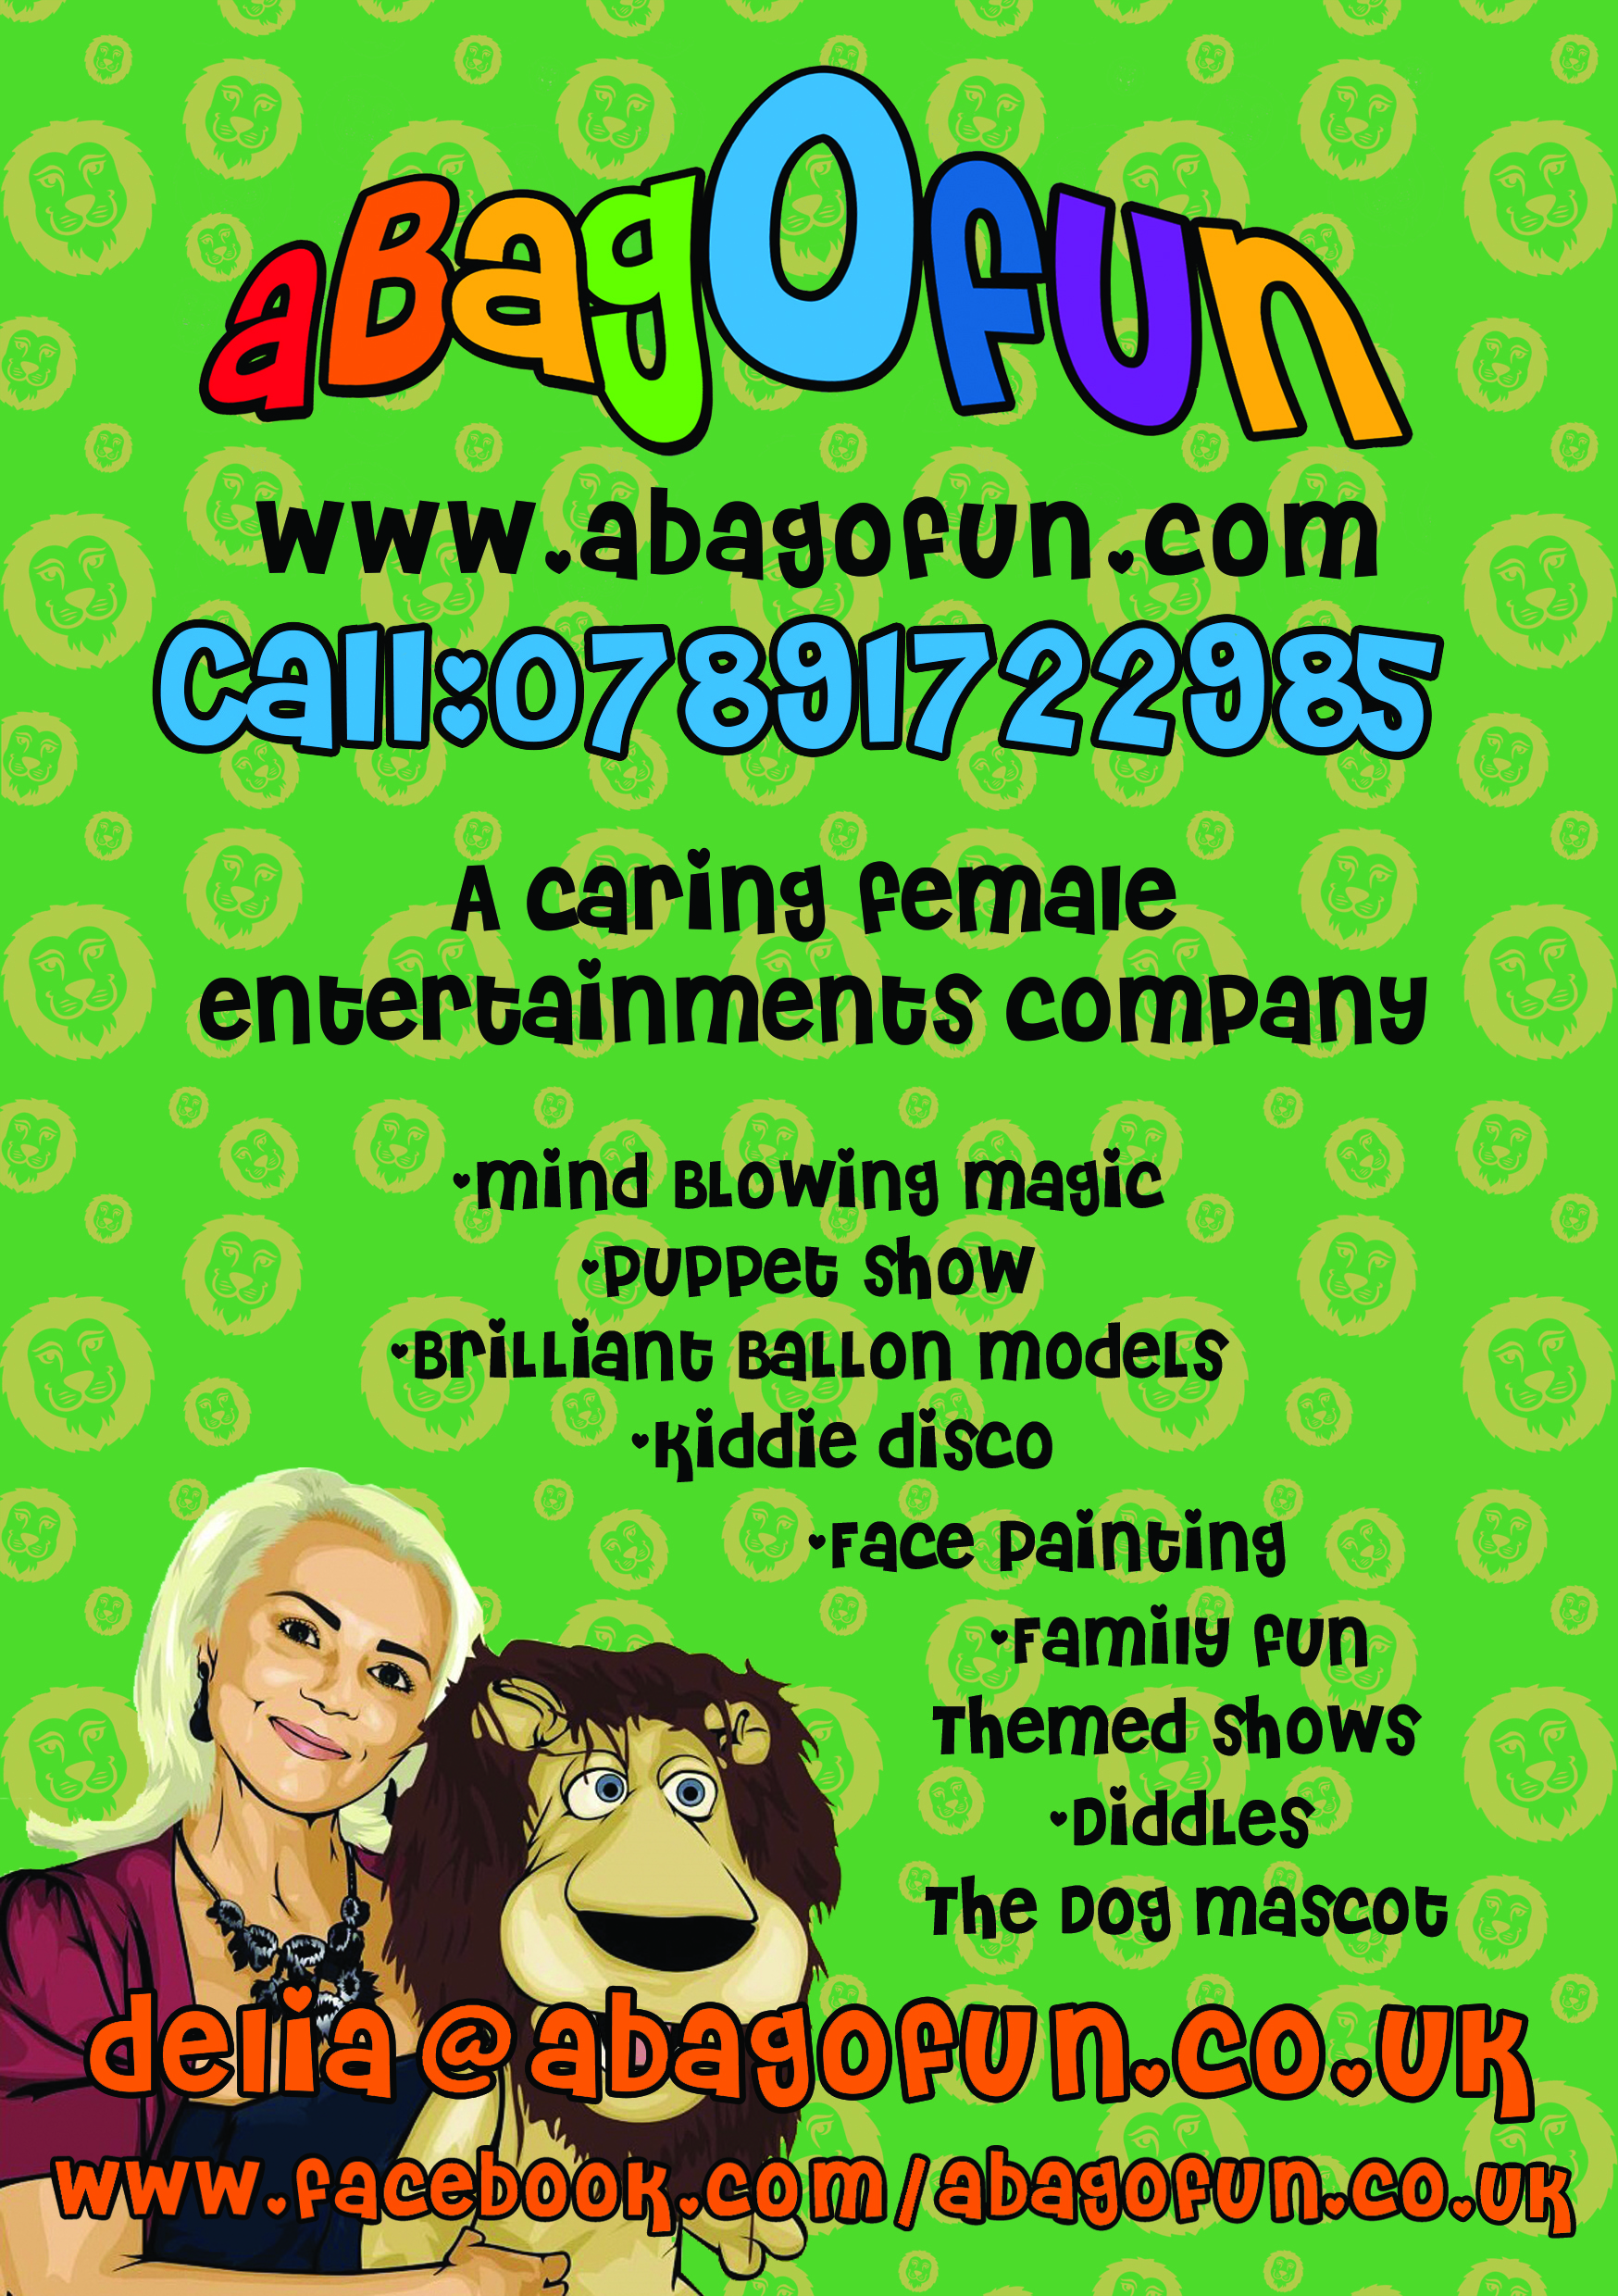 ABAGOFUN Entertainment